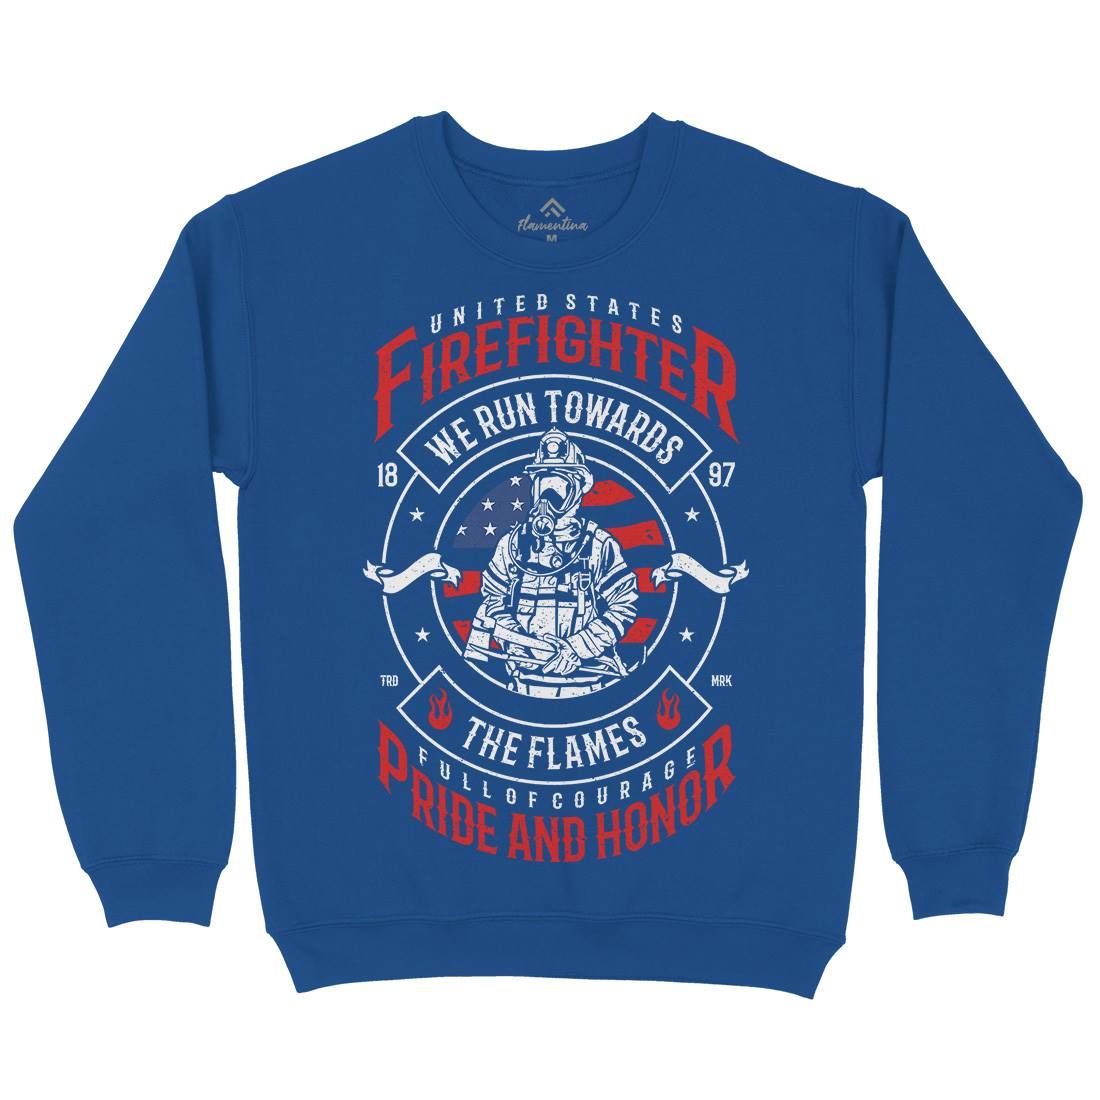 Flames Kids Crew Neck Sweatshirt Firefighters A656